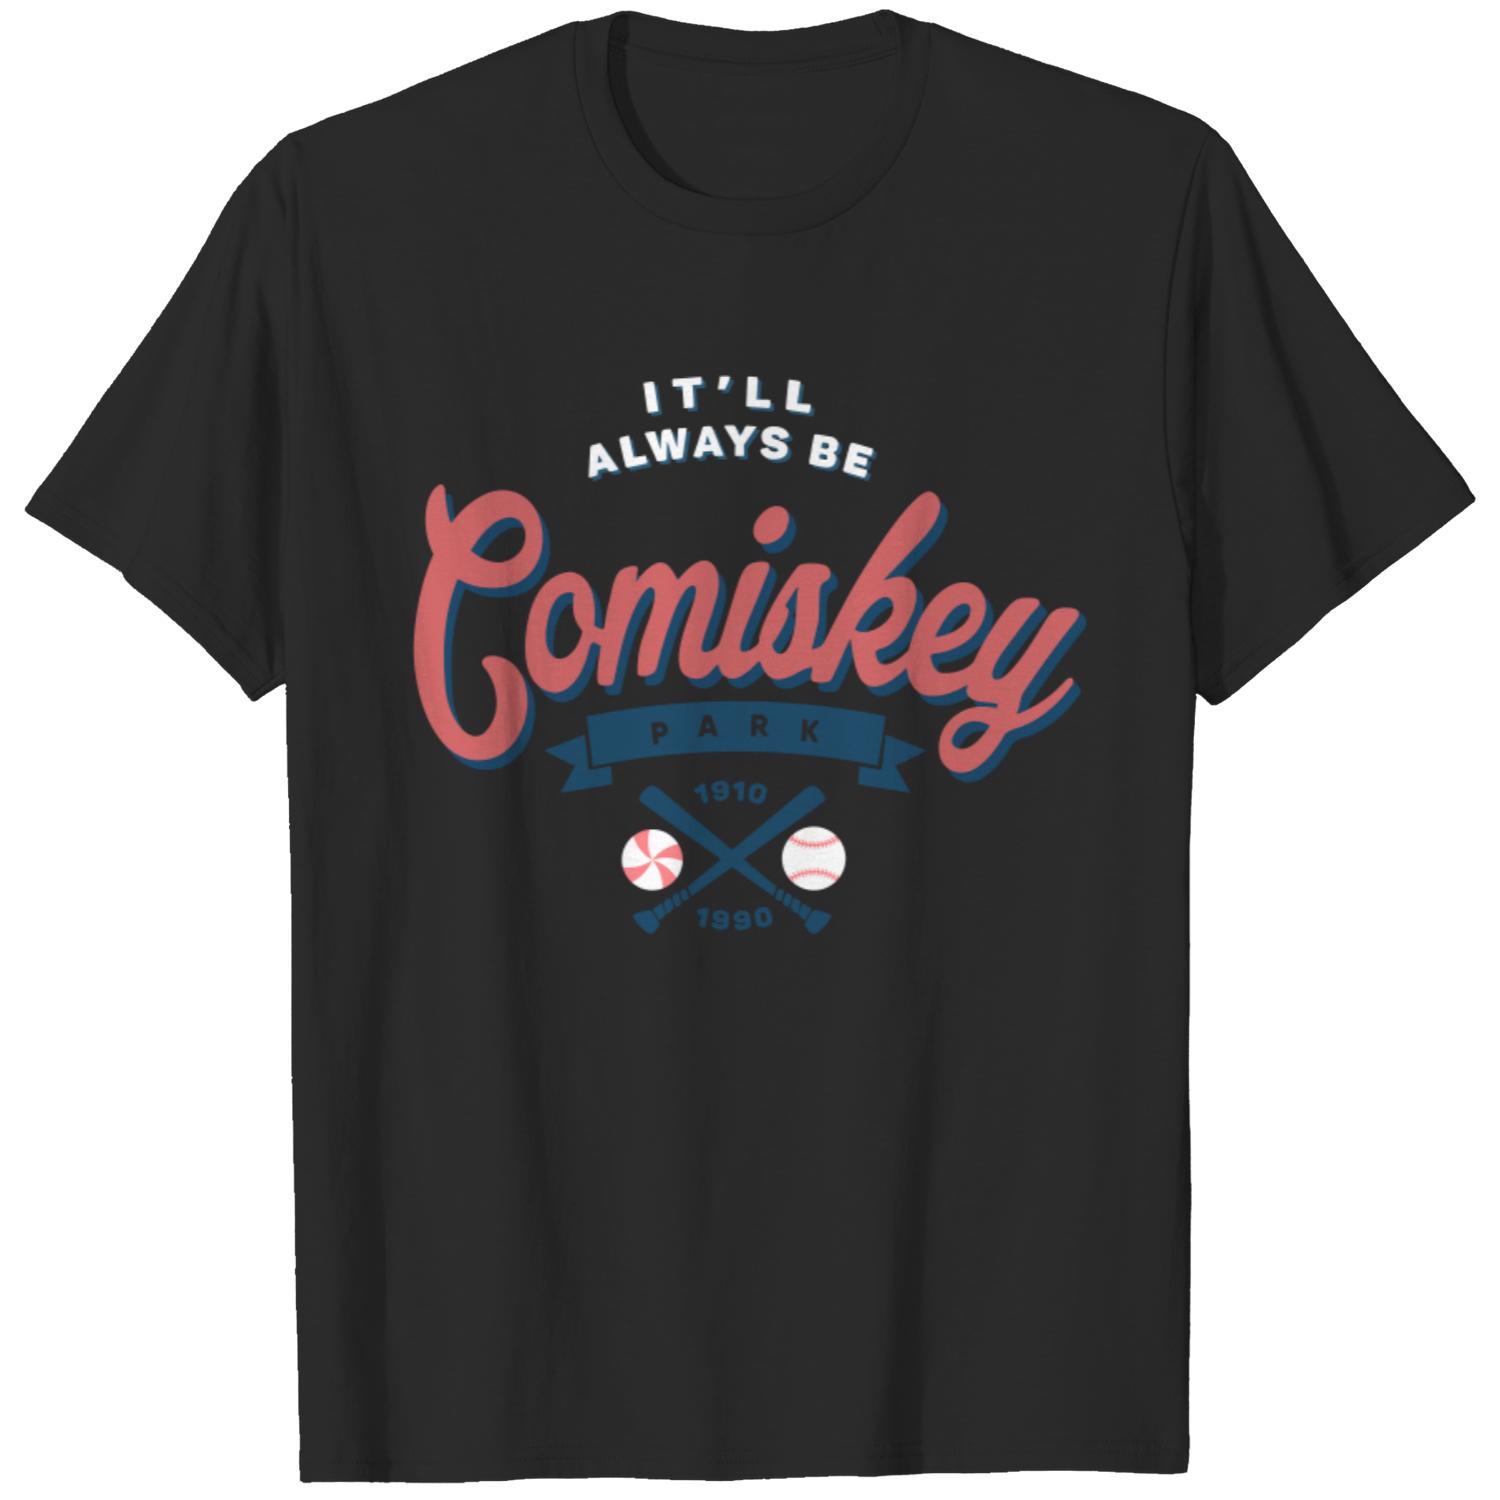 comiskey park shirt